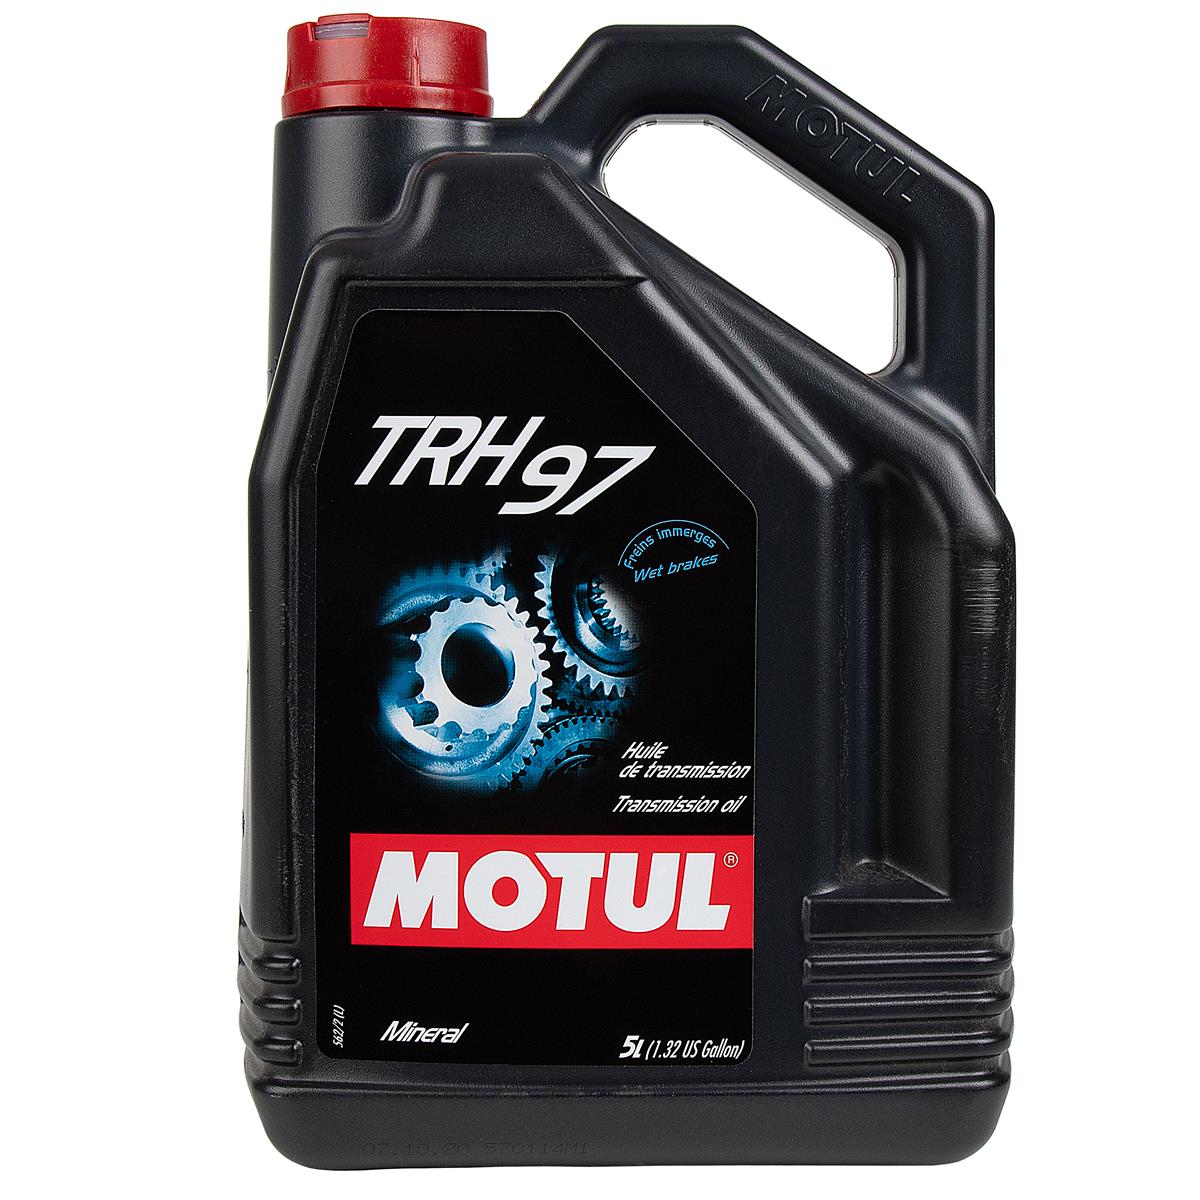 Motul Special Axle oil TRH 97 5 Liter